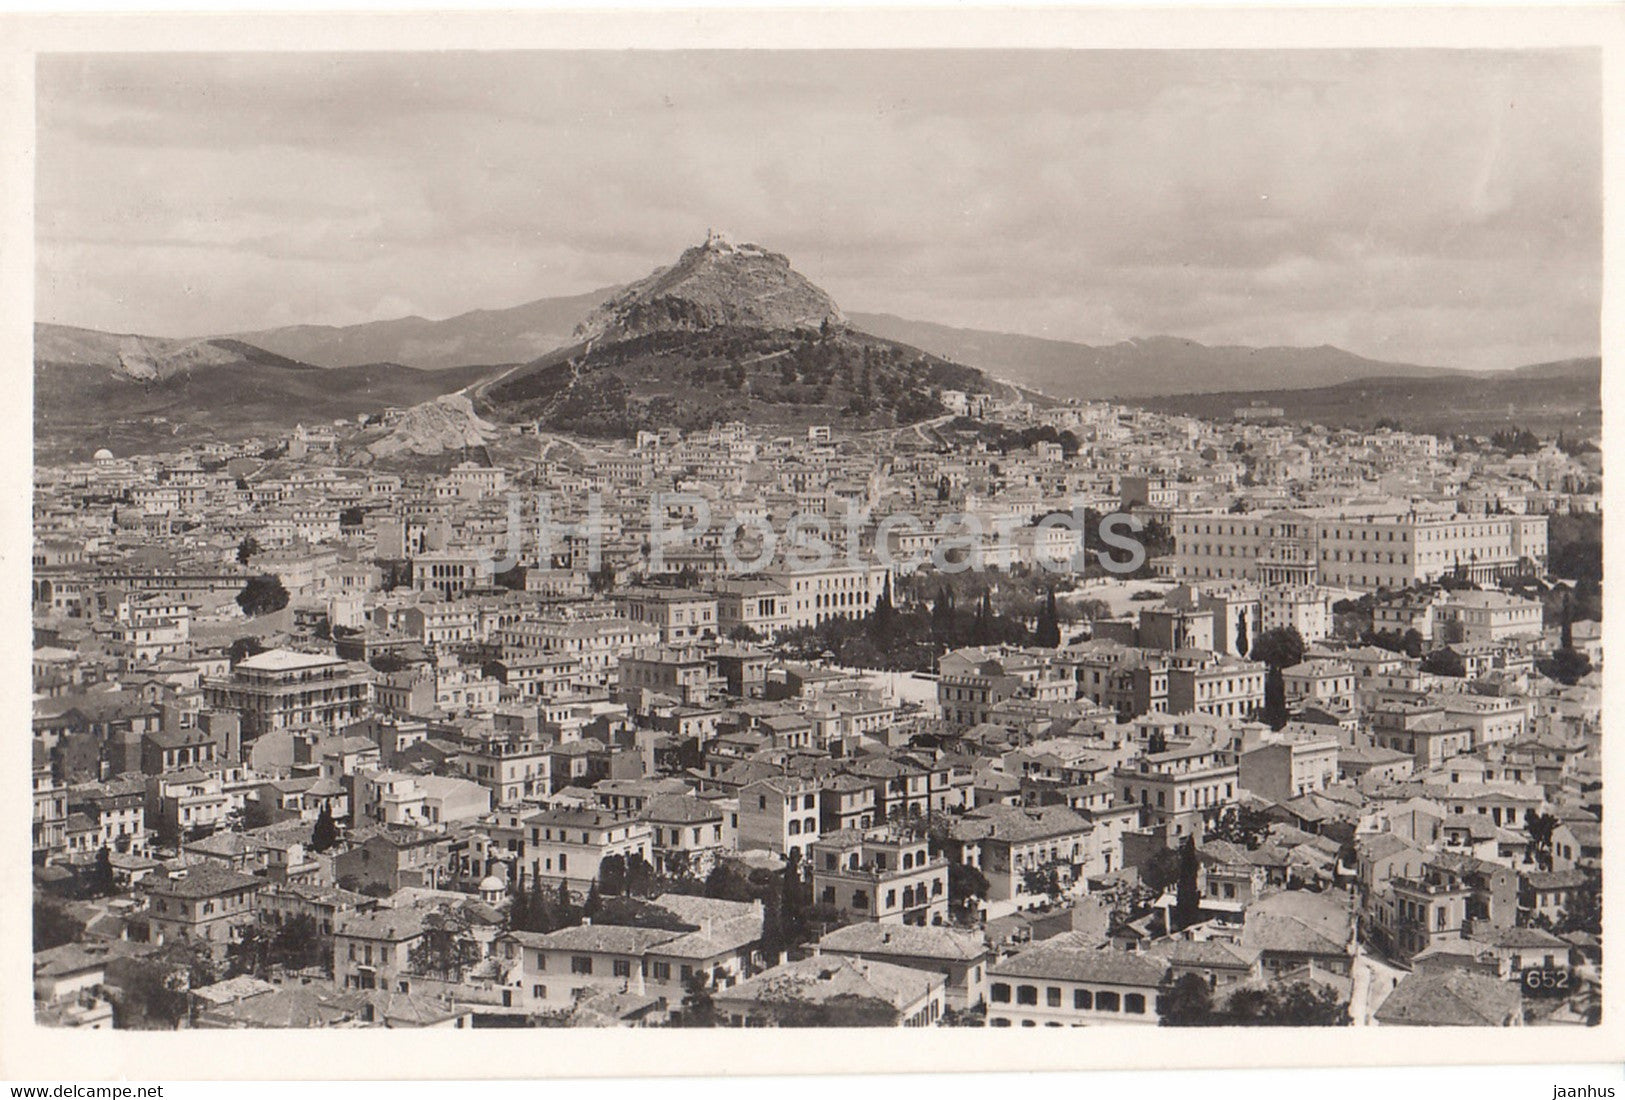 Athens - Athen - Lykabettos - Lycabettus - 652 - old postcard - Greece - unused - JH Postcards